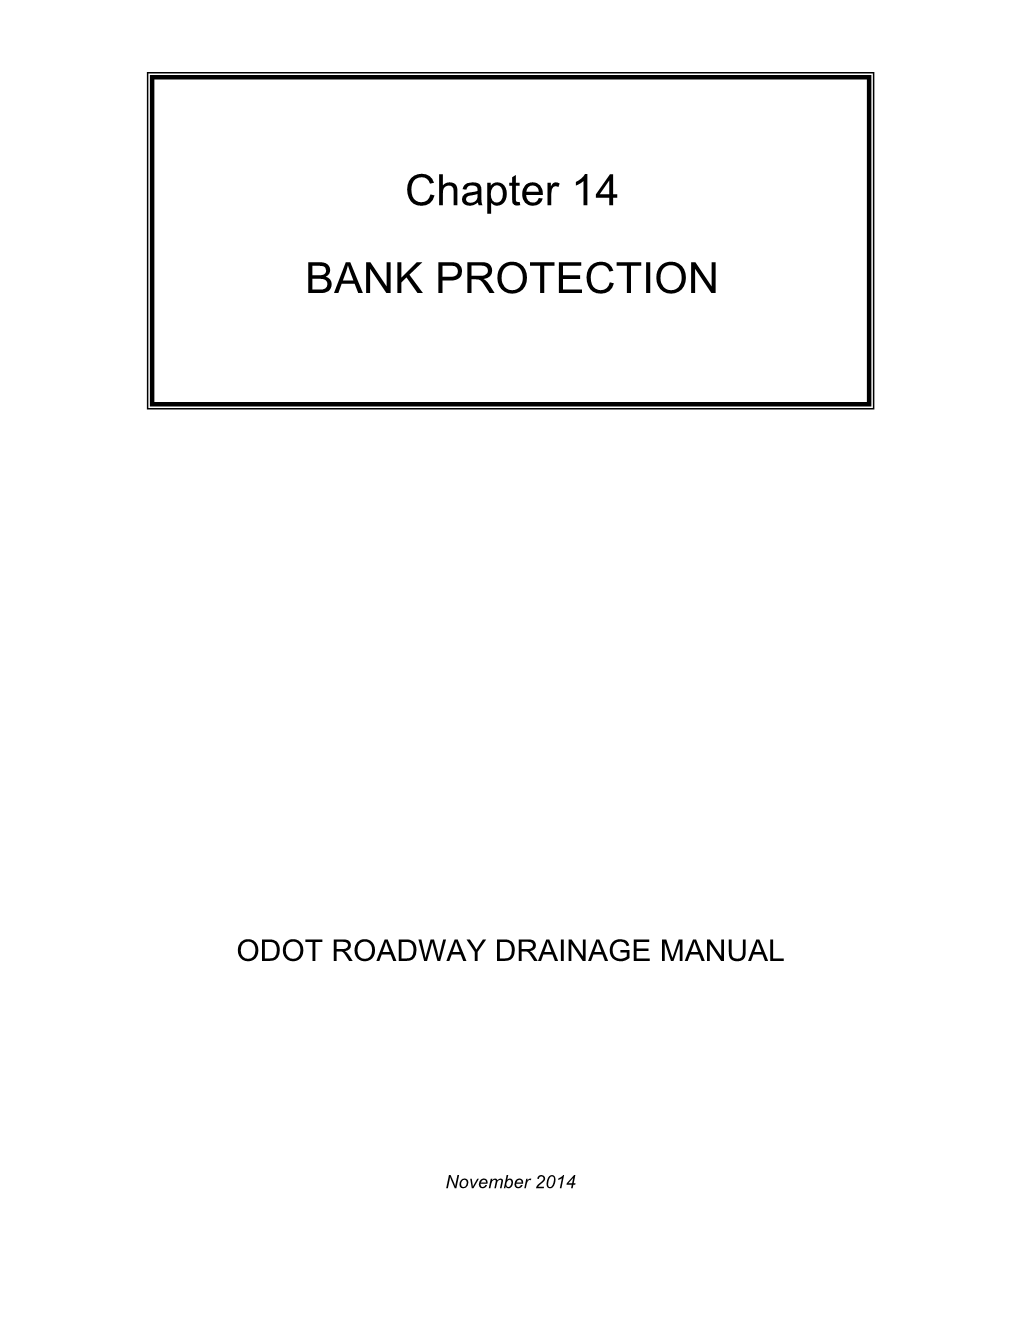 Bank Protection